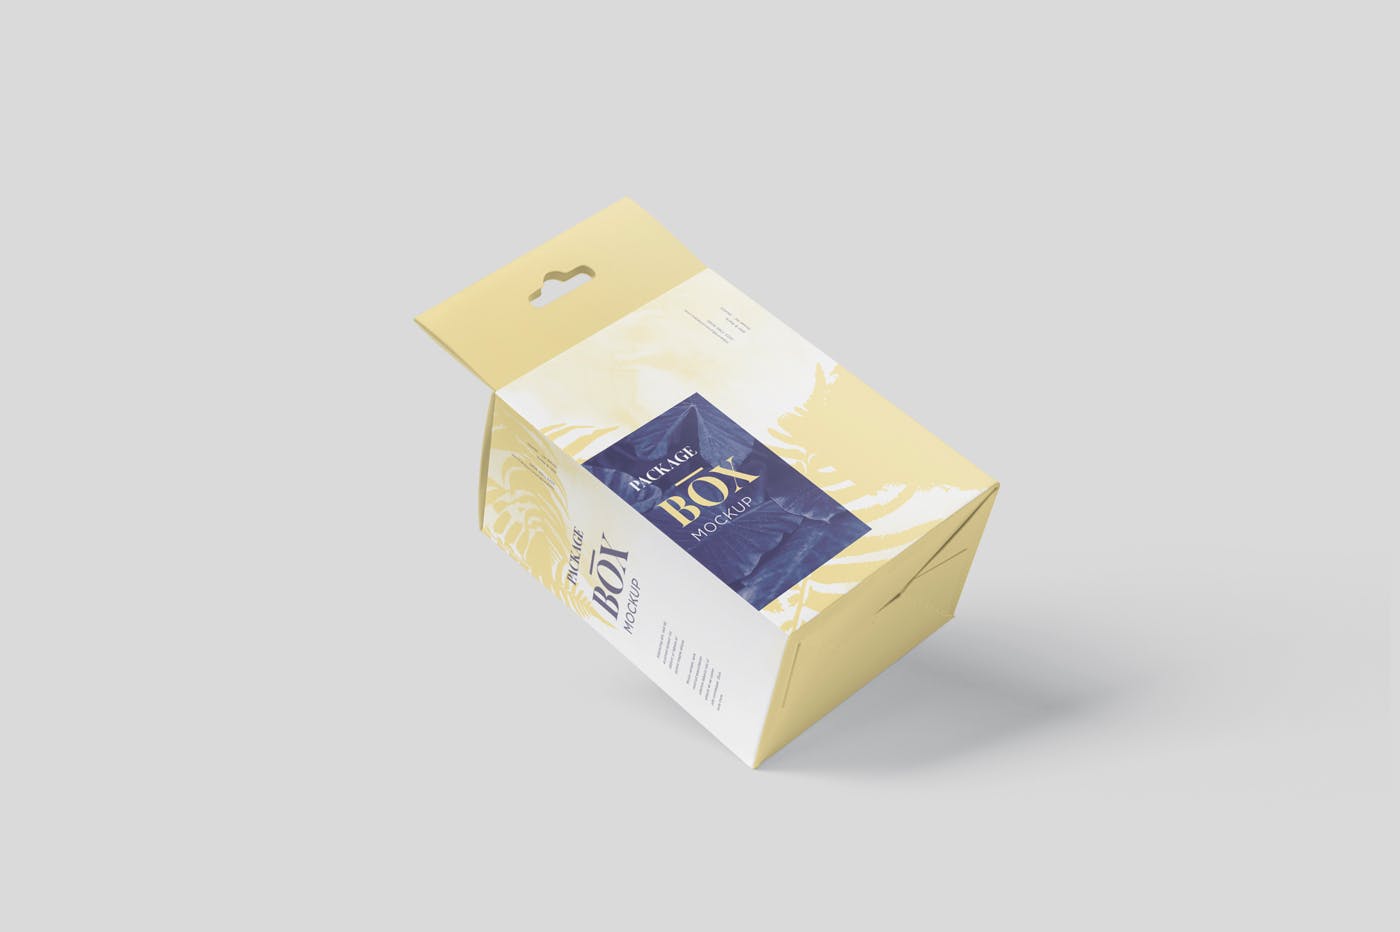 挂耳式扁平矩形包装盒16图库精选模板 Package Box Mockup Set – Slim Square with Hanger插图(3)